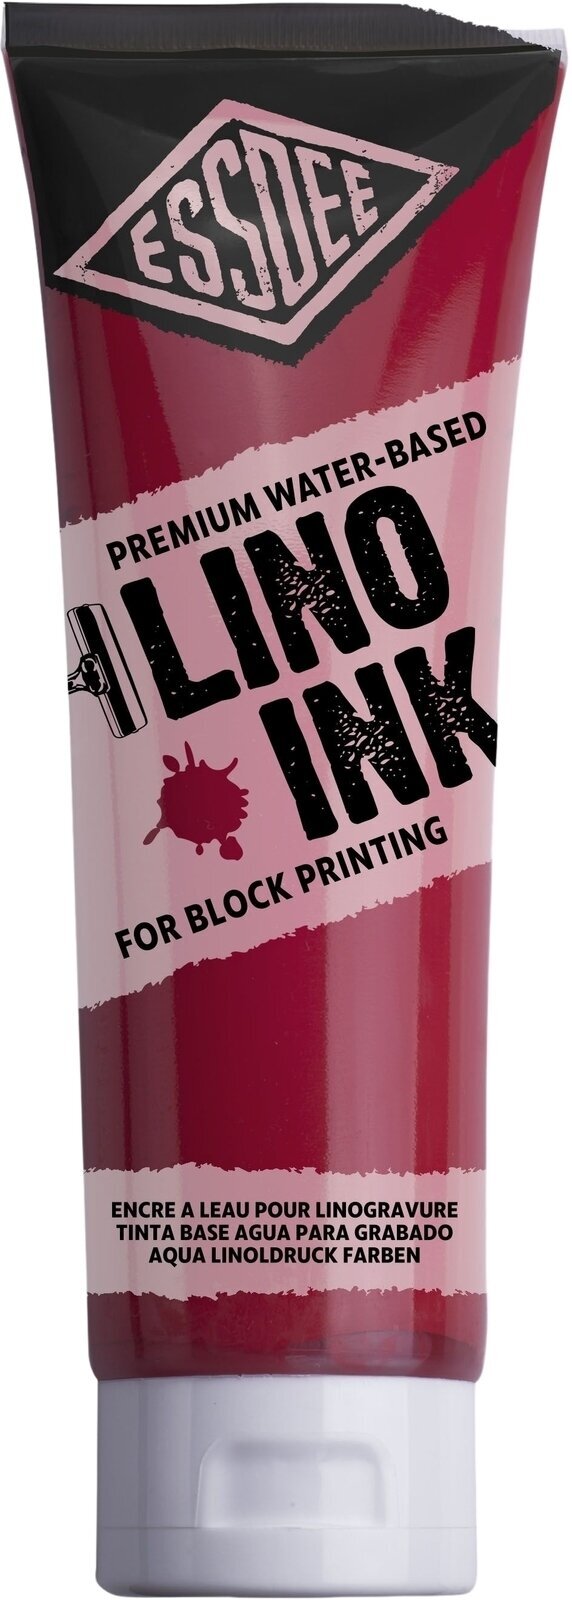 Farbe für Linolschnitt Essdee Block Printing Ink Farbe für Linolschnitt Brilliant Red (Scarlet) 300 ml